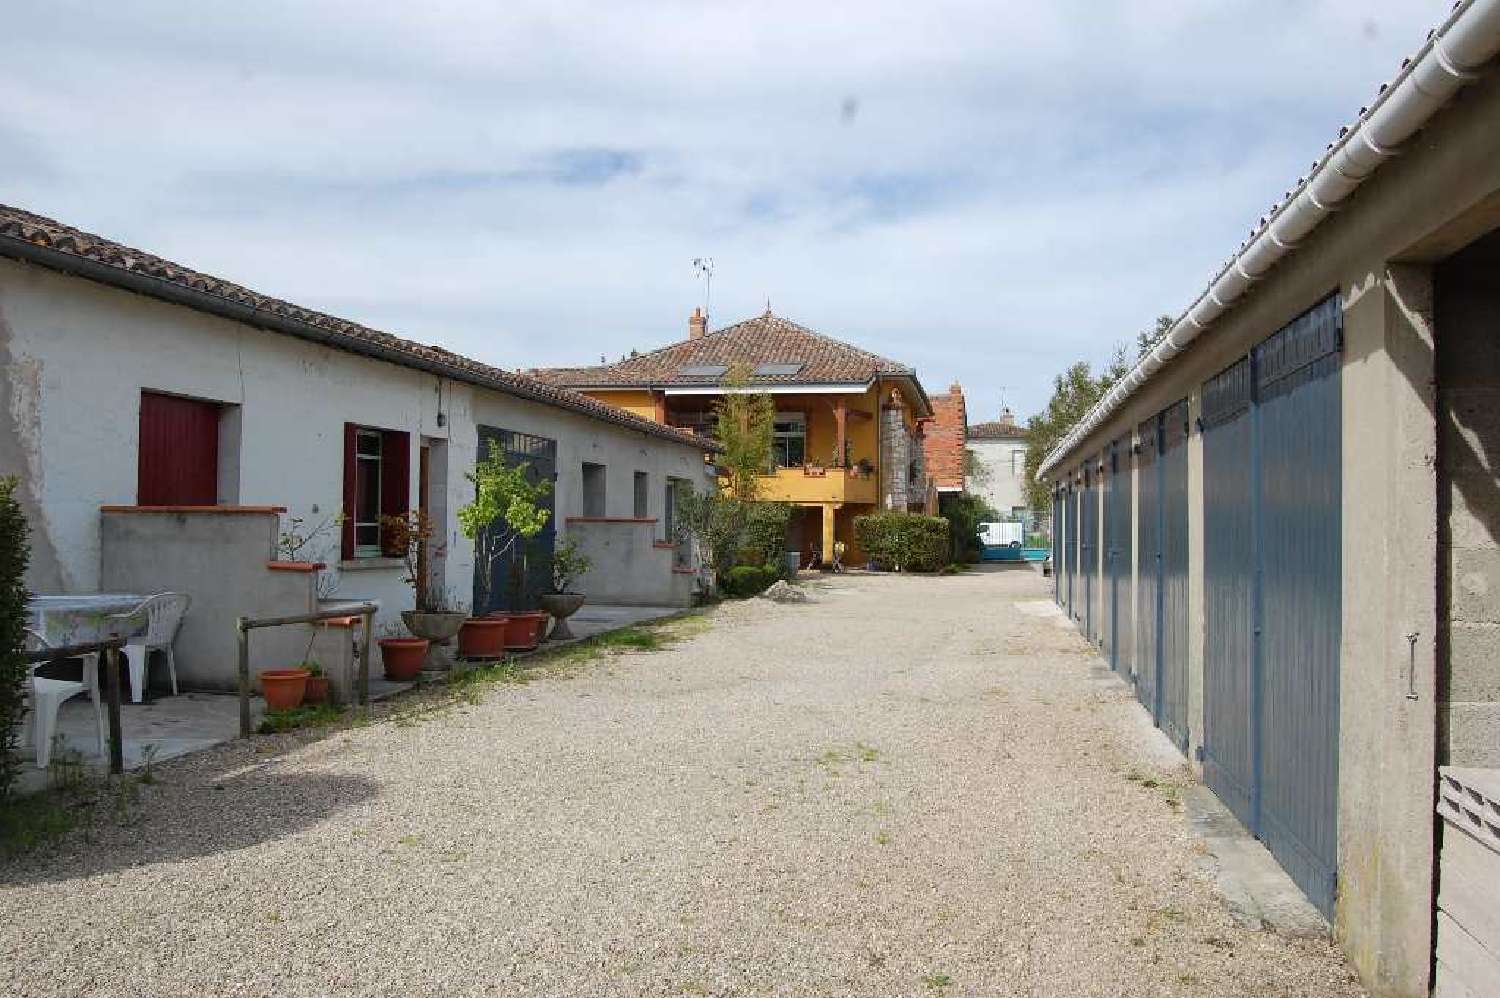  à vendre maison Montauban Tarn-et-Garonne 2